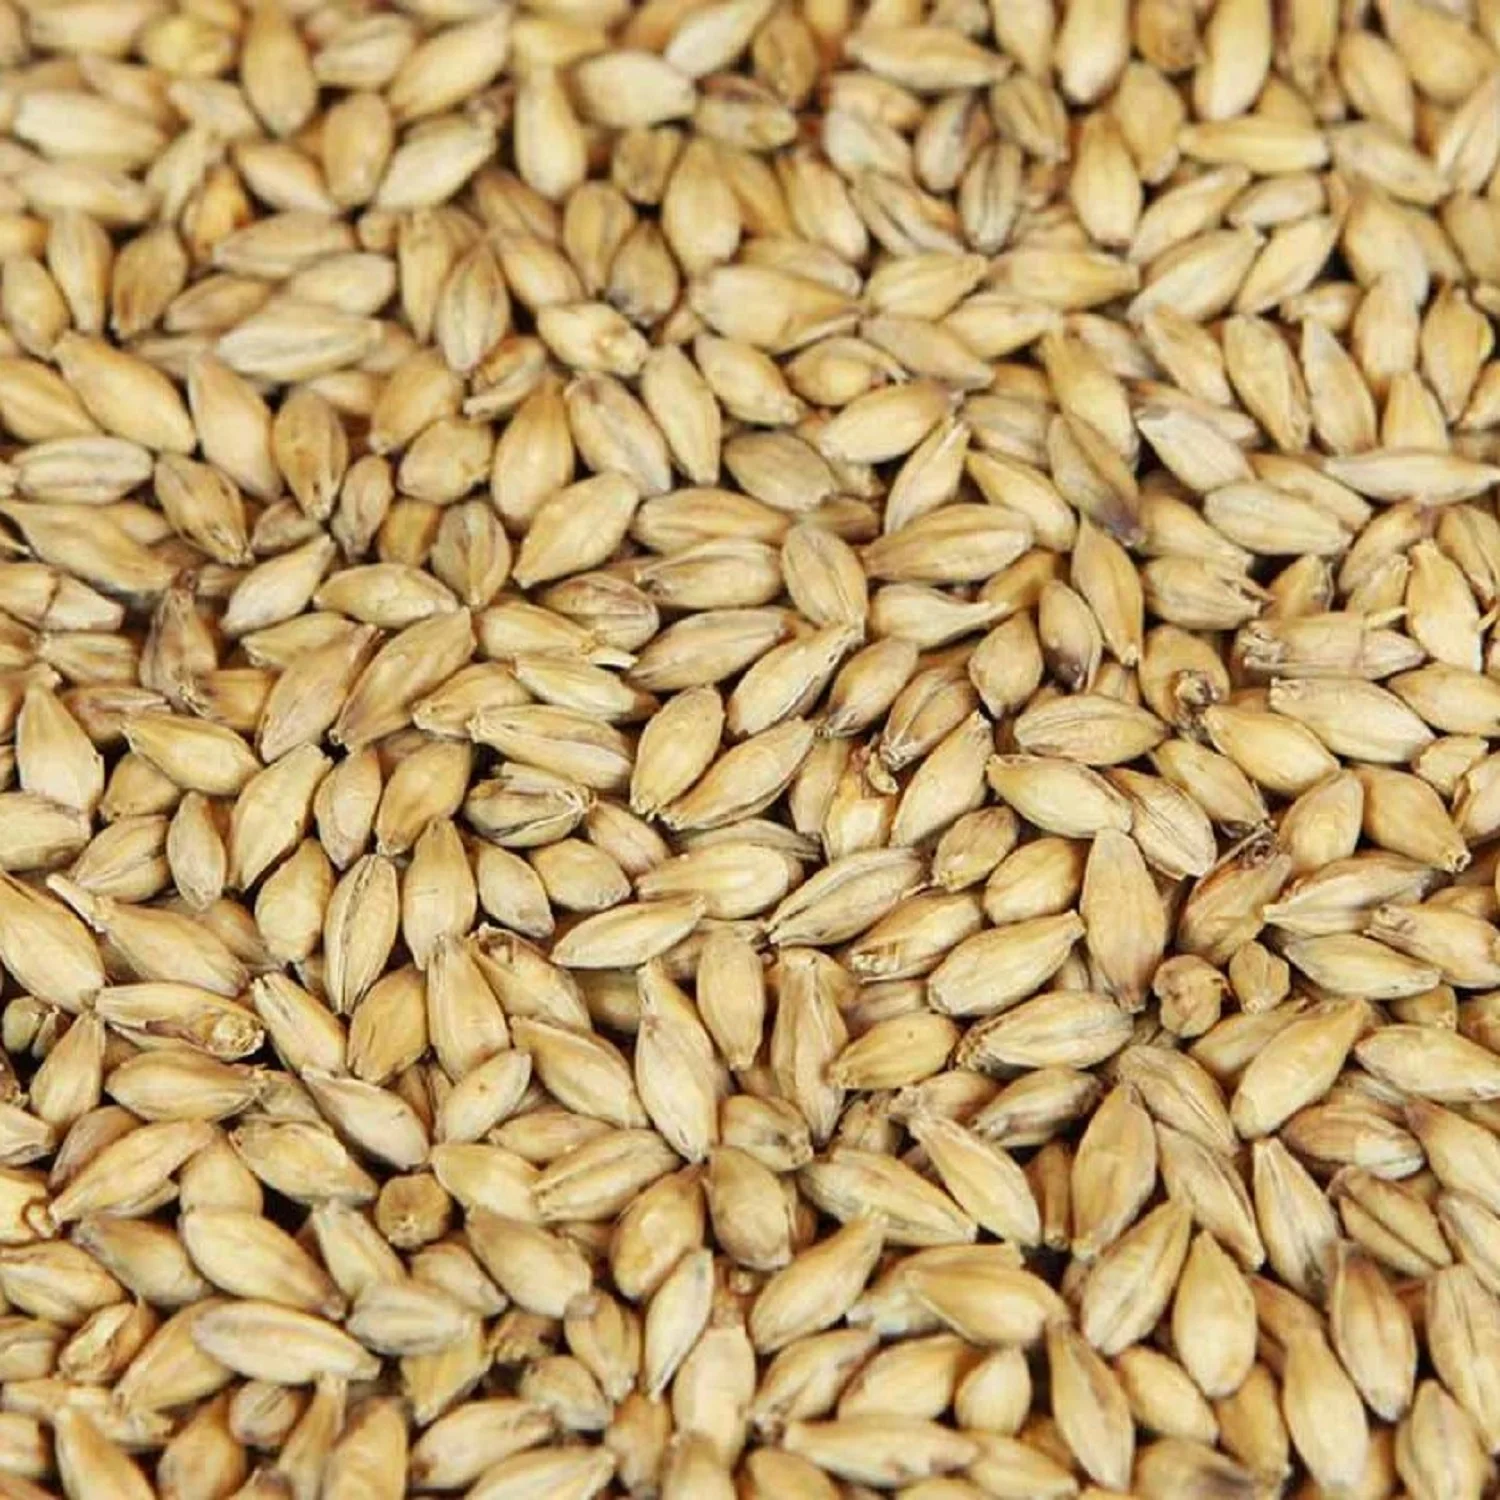 Barley for Sale, Feed Barley and Barley Seeds for sale, High quality Barley Grains for animal feed/Bulk barley Grains